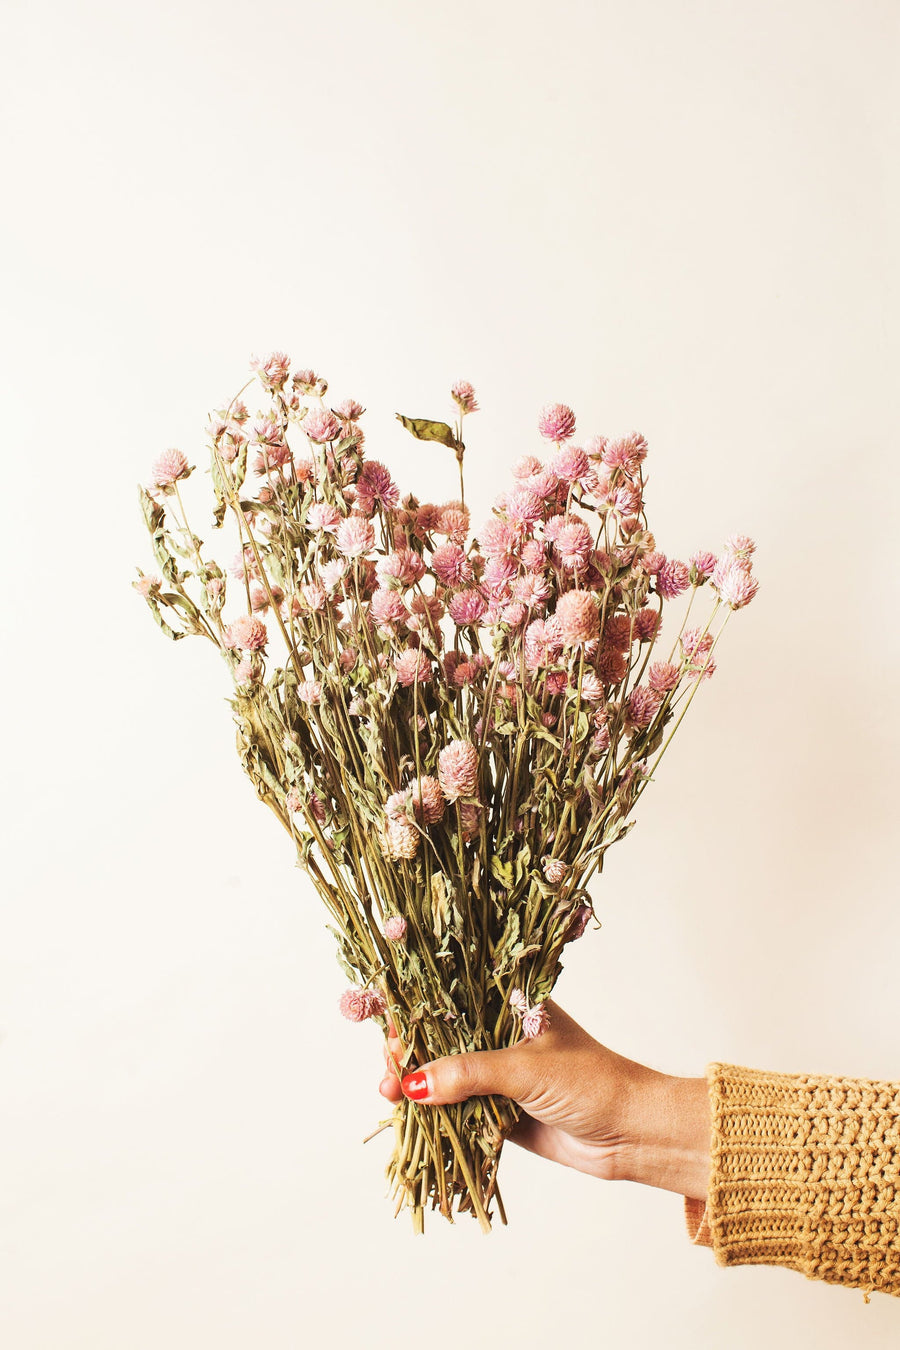 Idlewild Floral Co. Pink Globe Amaranth